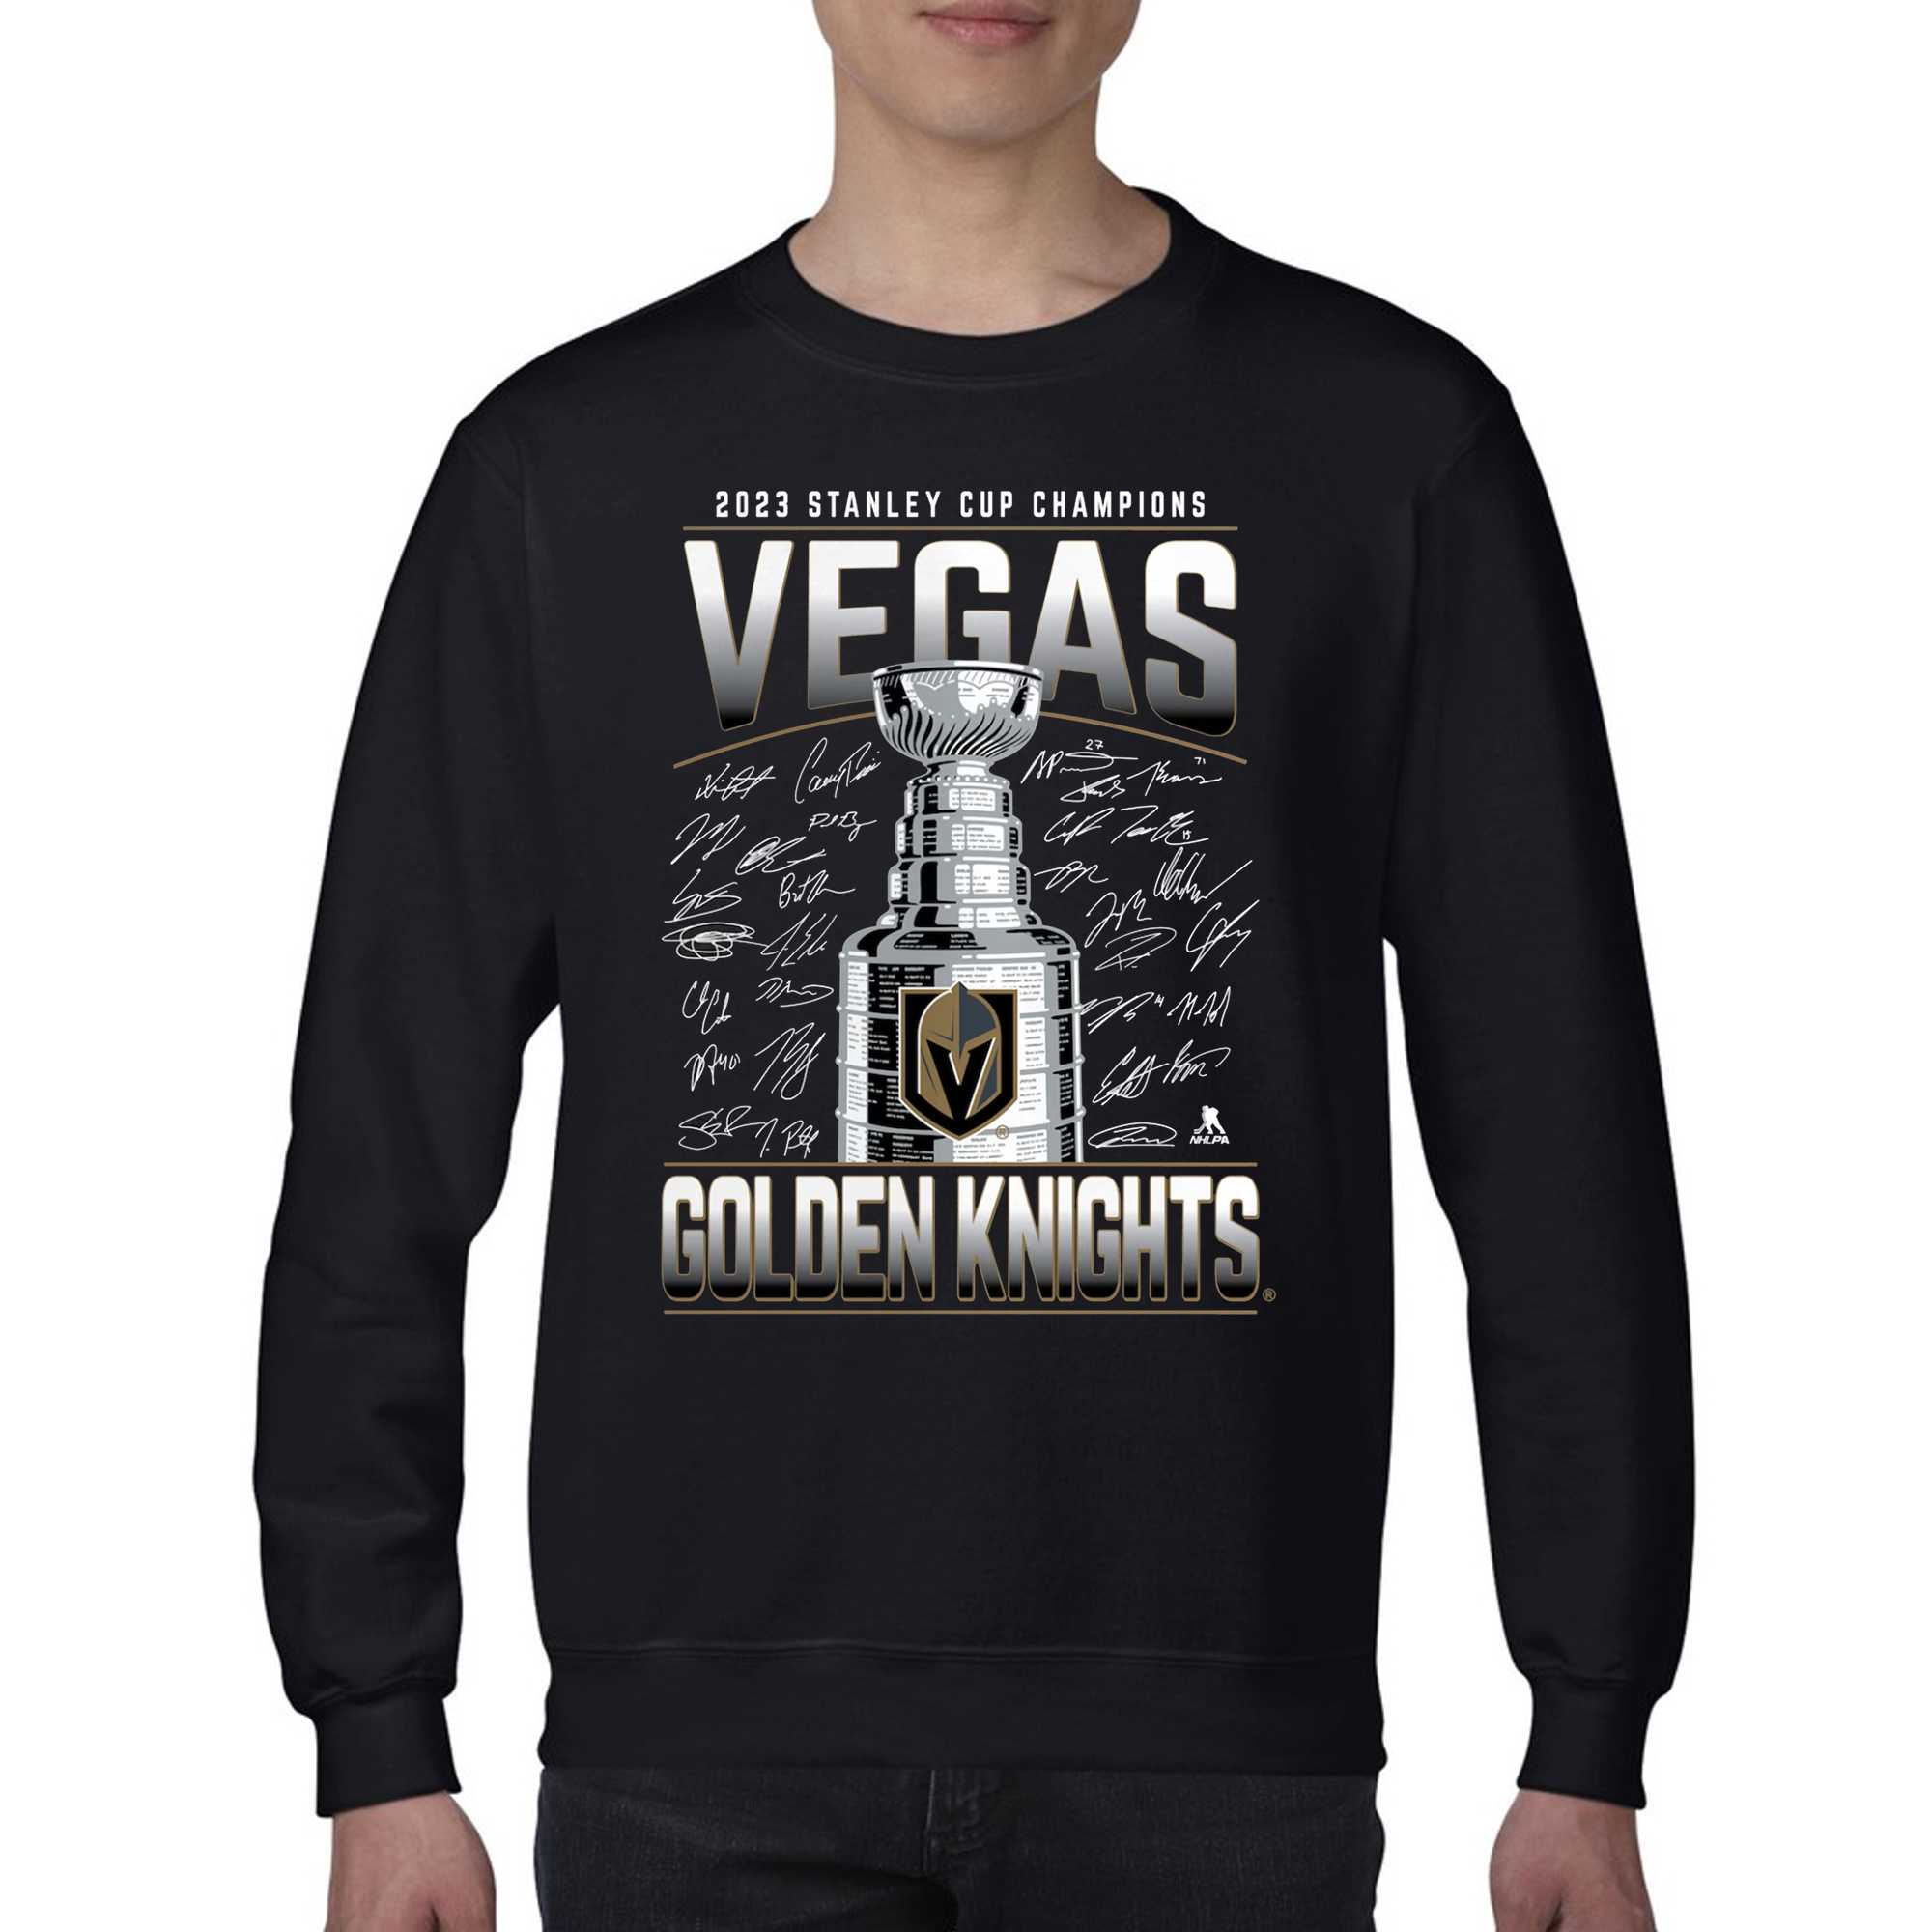 https://shibtee.com/wp-content/uploads/2023/06/2023-stanley-cup-champions-vegas-golden-knights-signature-t-shirt-4.jpg